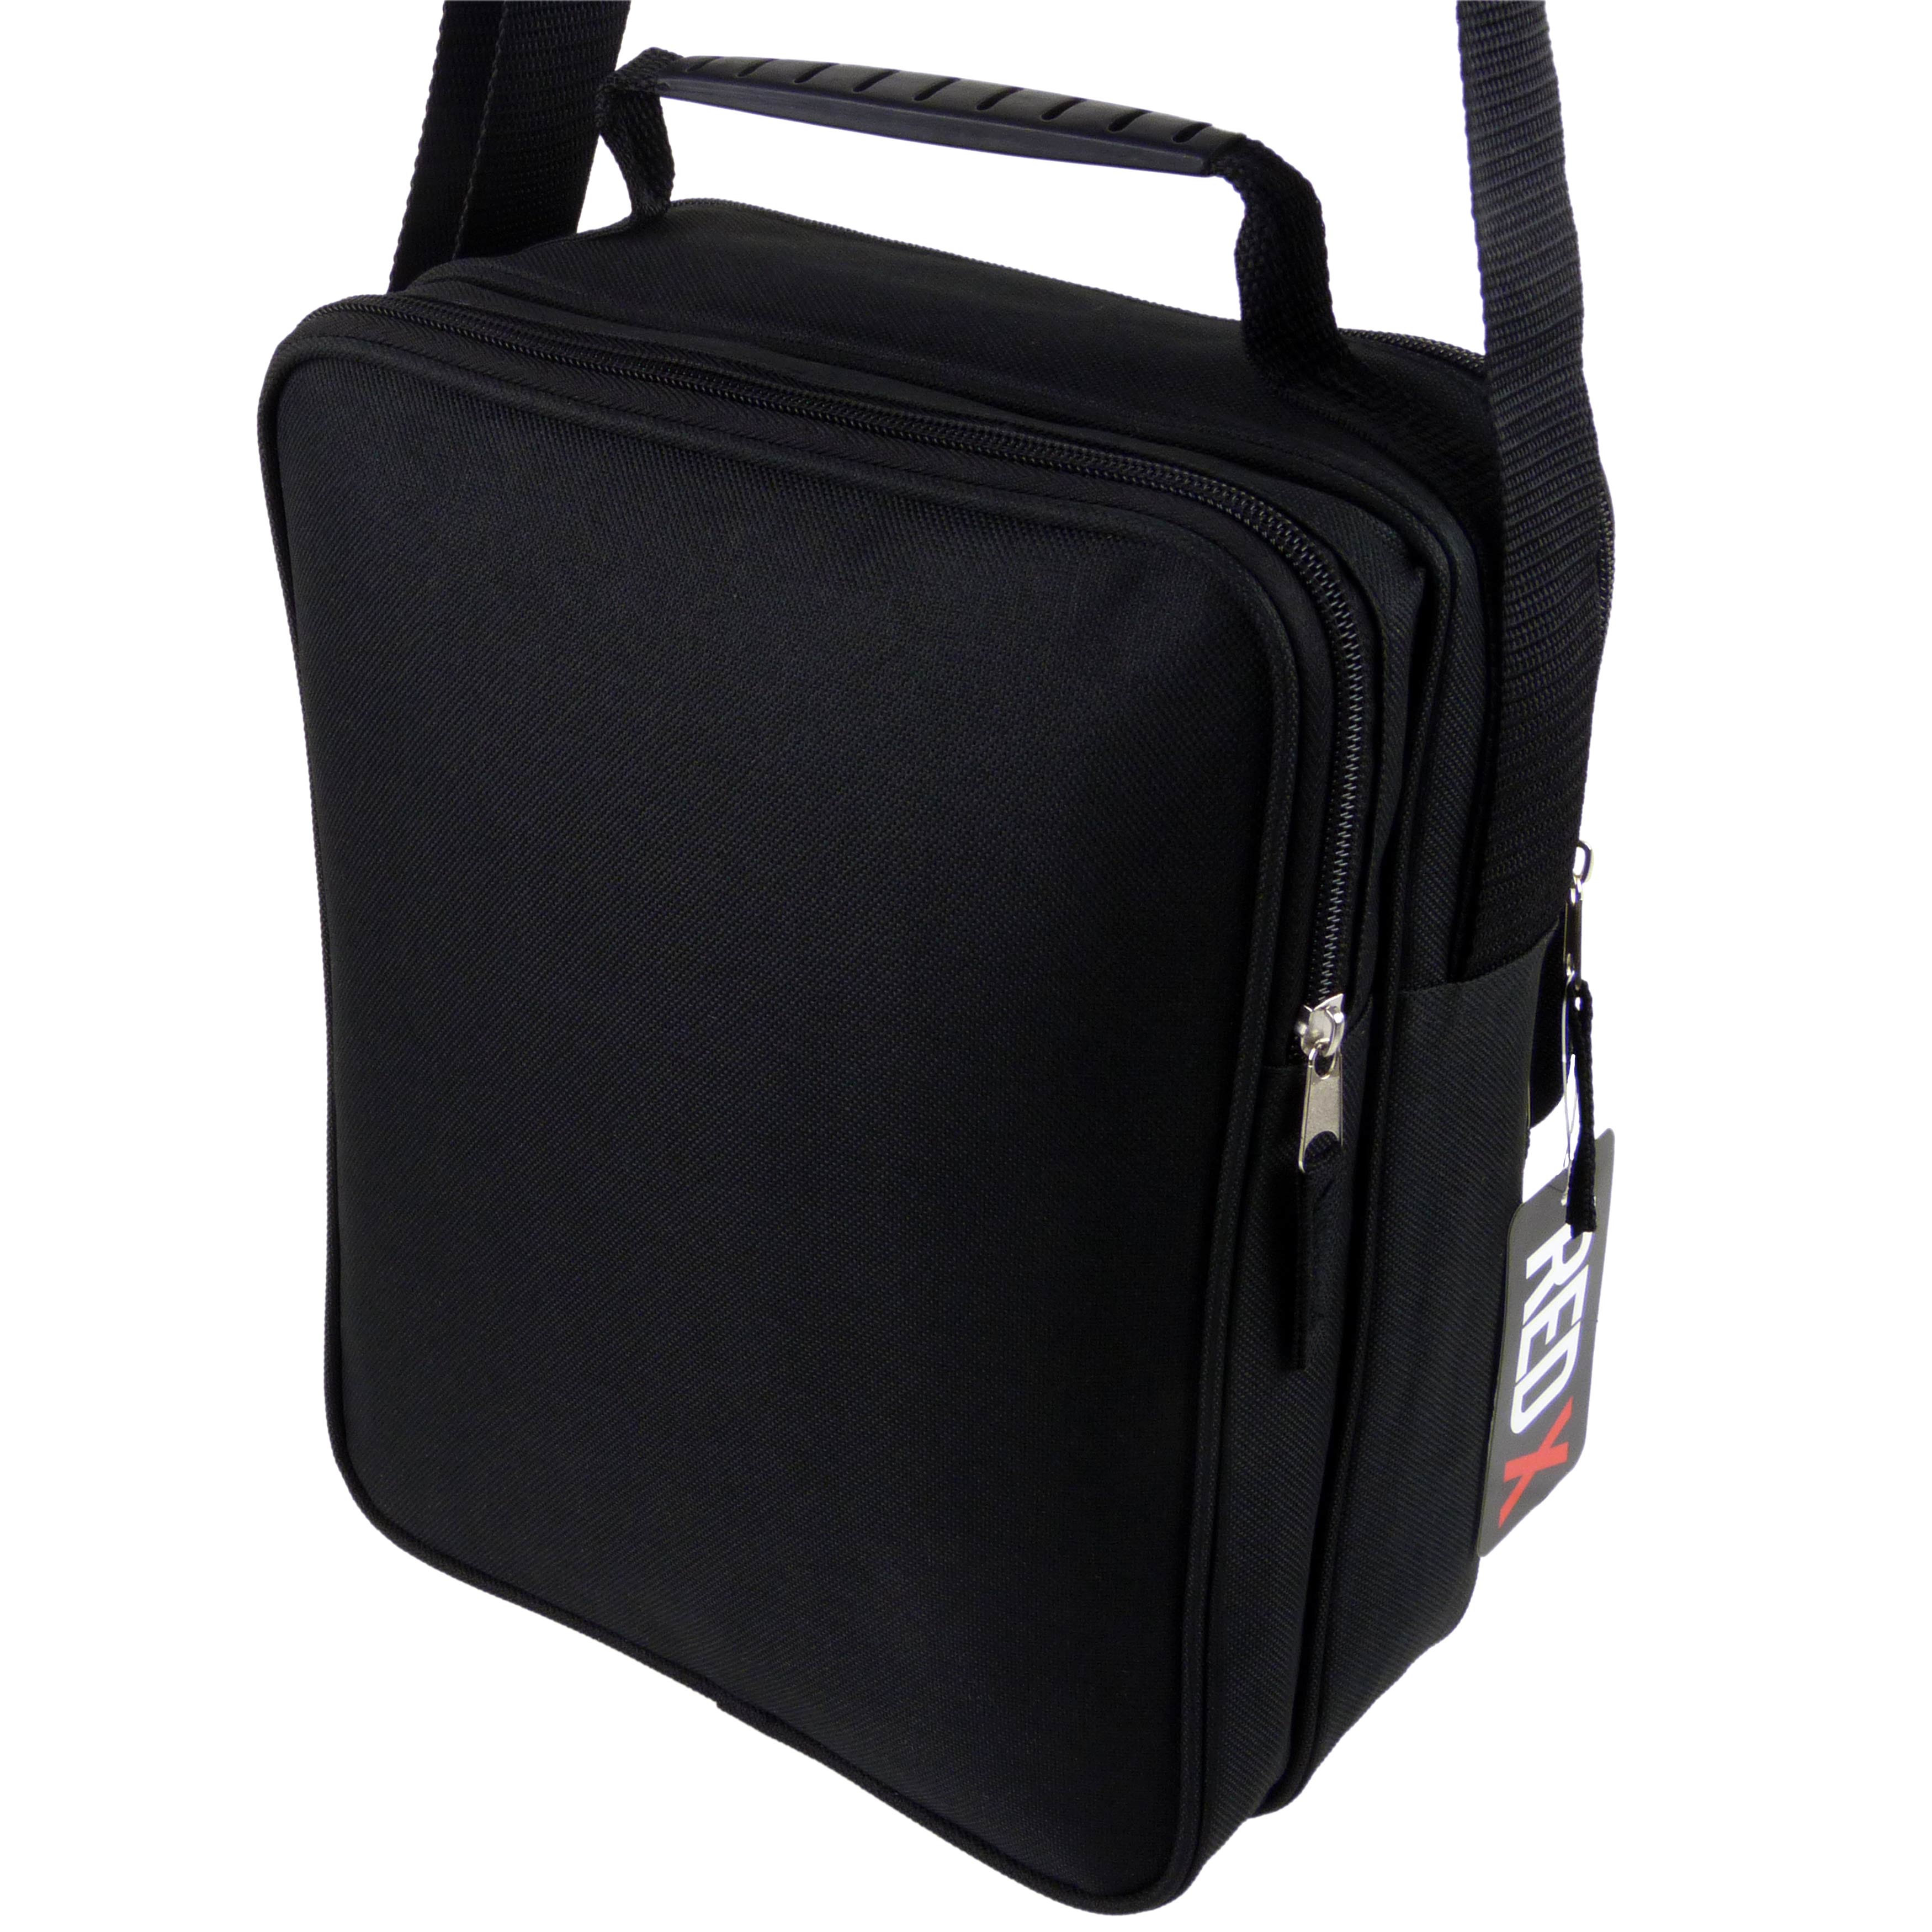 Black Canvas Bag Utility Cross Body Messenger Shoulder Travel Work Men's Ladies